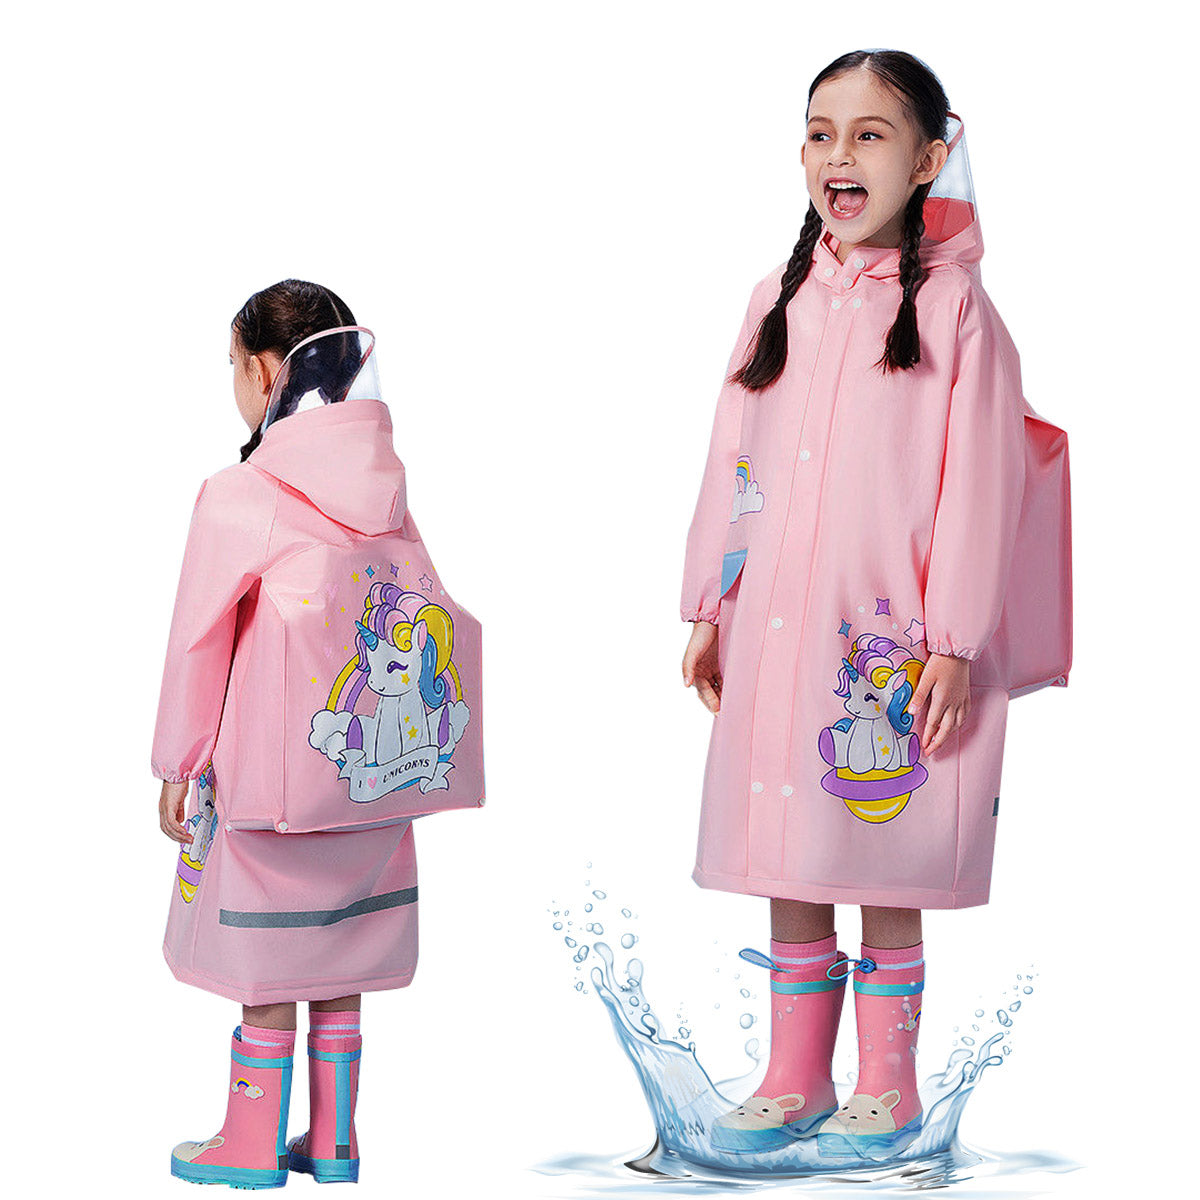 PALAY Raincoat for Kids Boys Girls with Pockets, EVA Hooded Raincoat with School Bag Rain Cover, Unicorn Printed Kids Rain Coat (XL, 115-130cm)